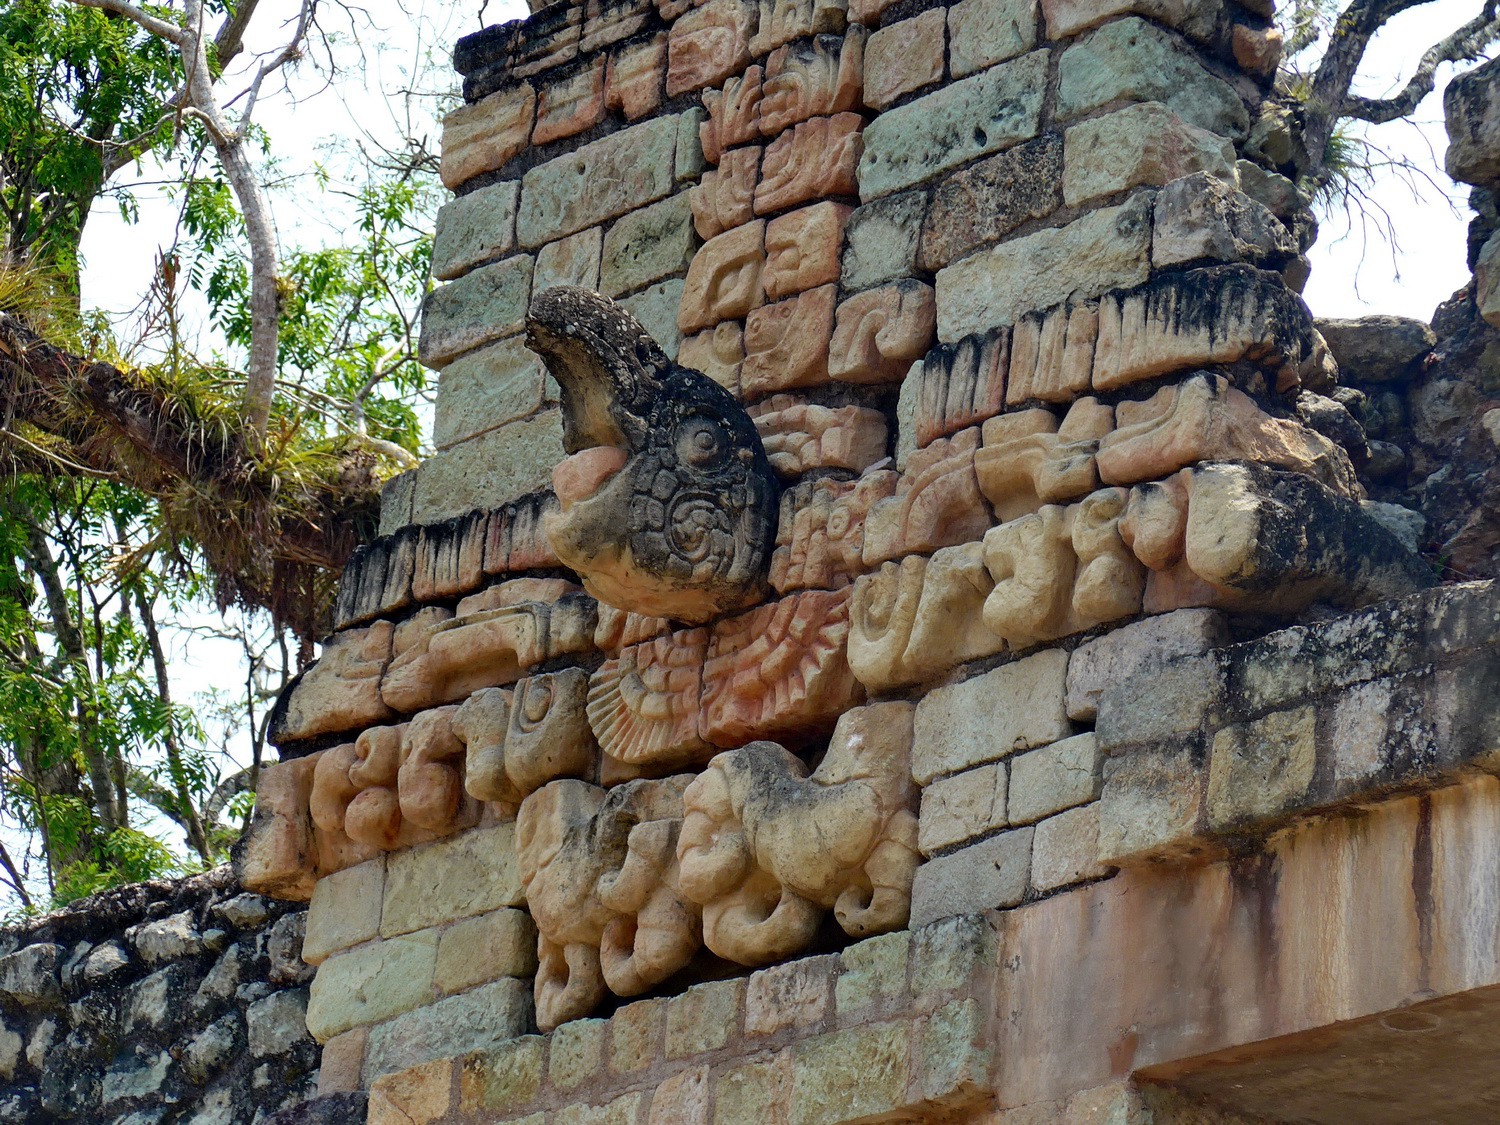 Watching Macaw, a holy bird of the Maya world